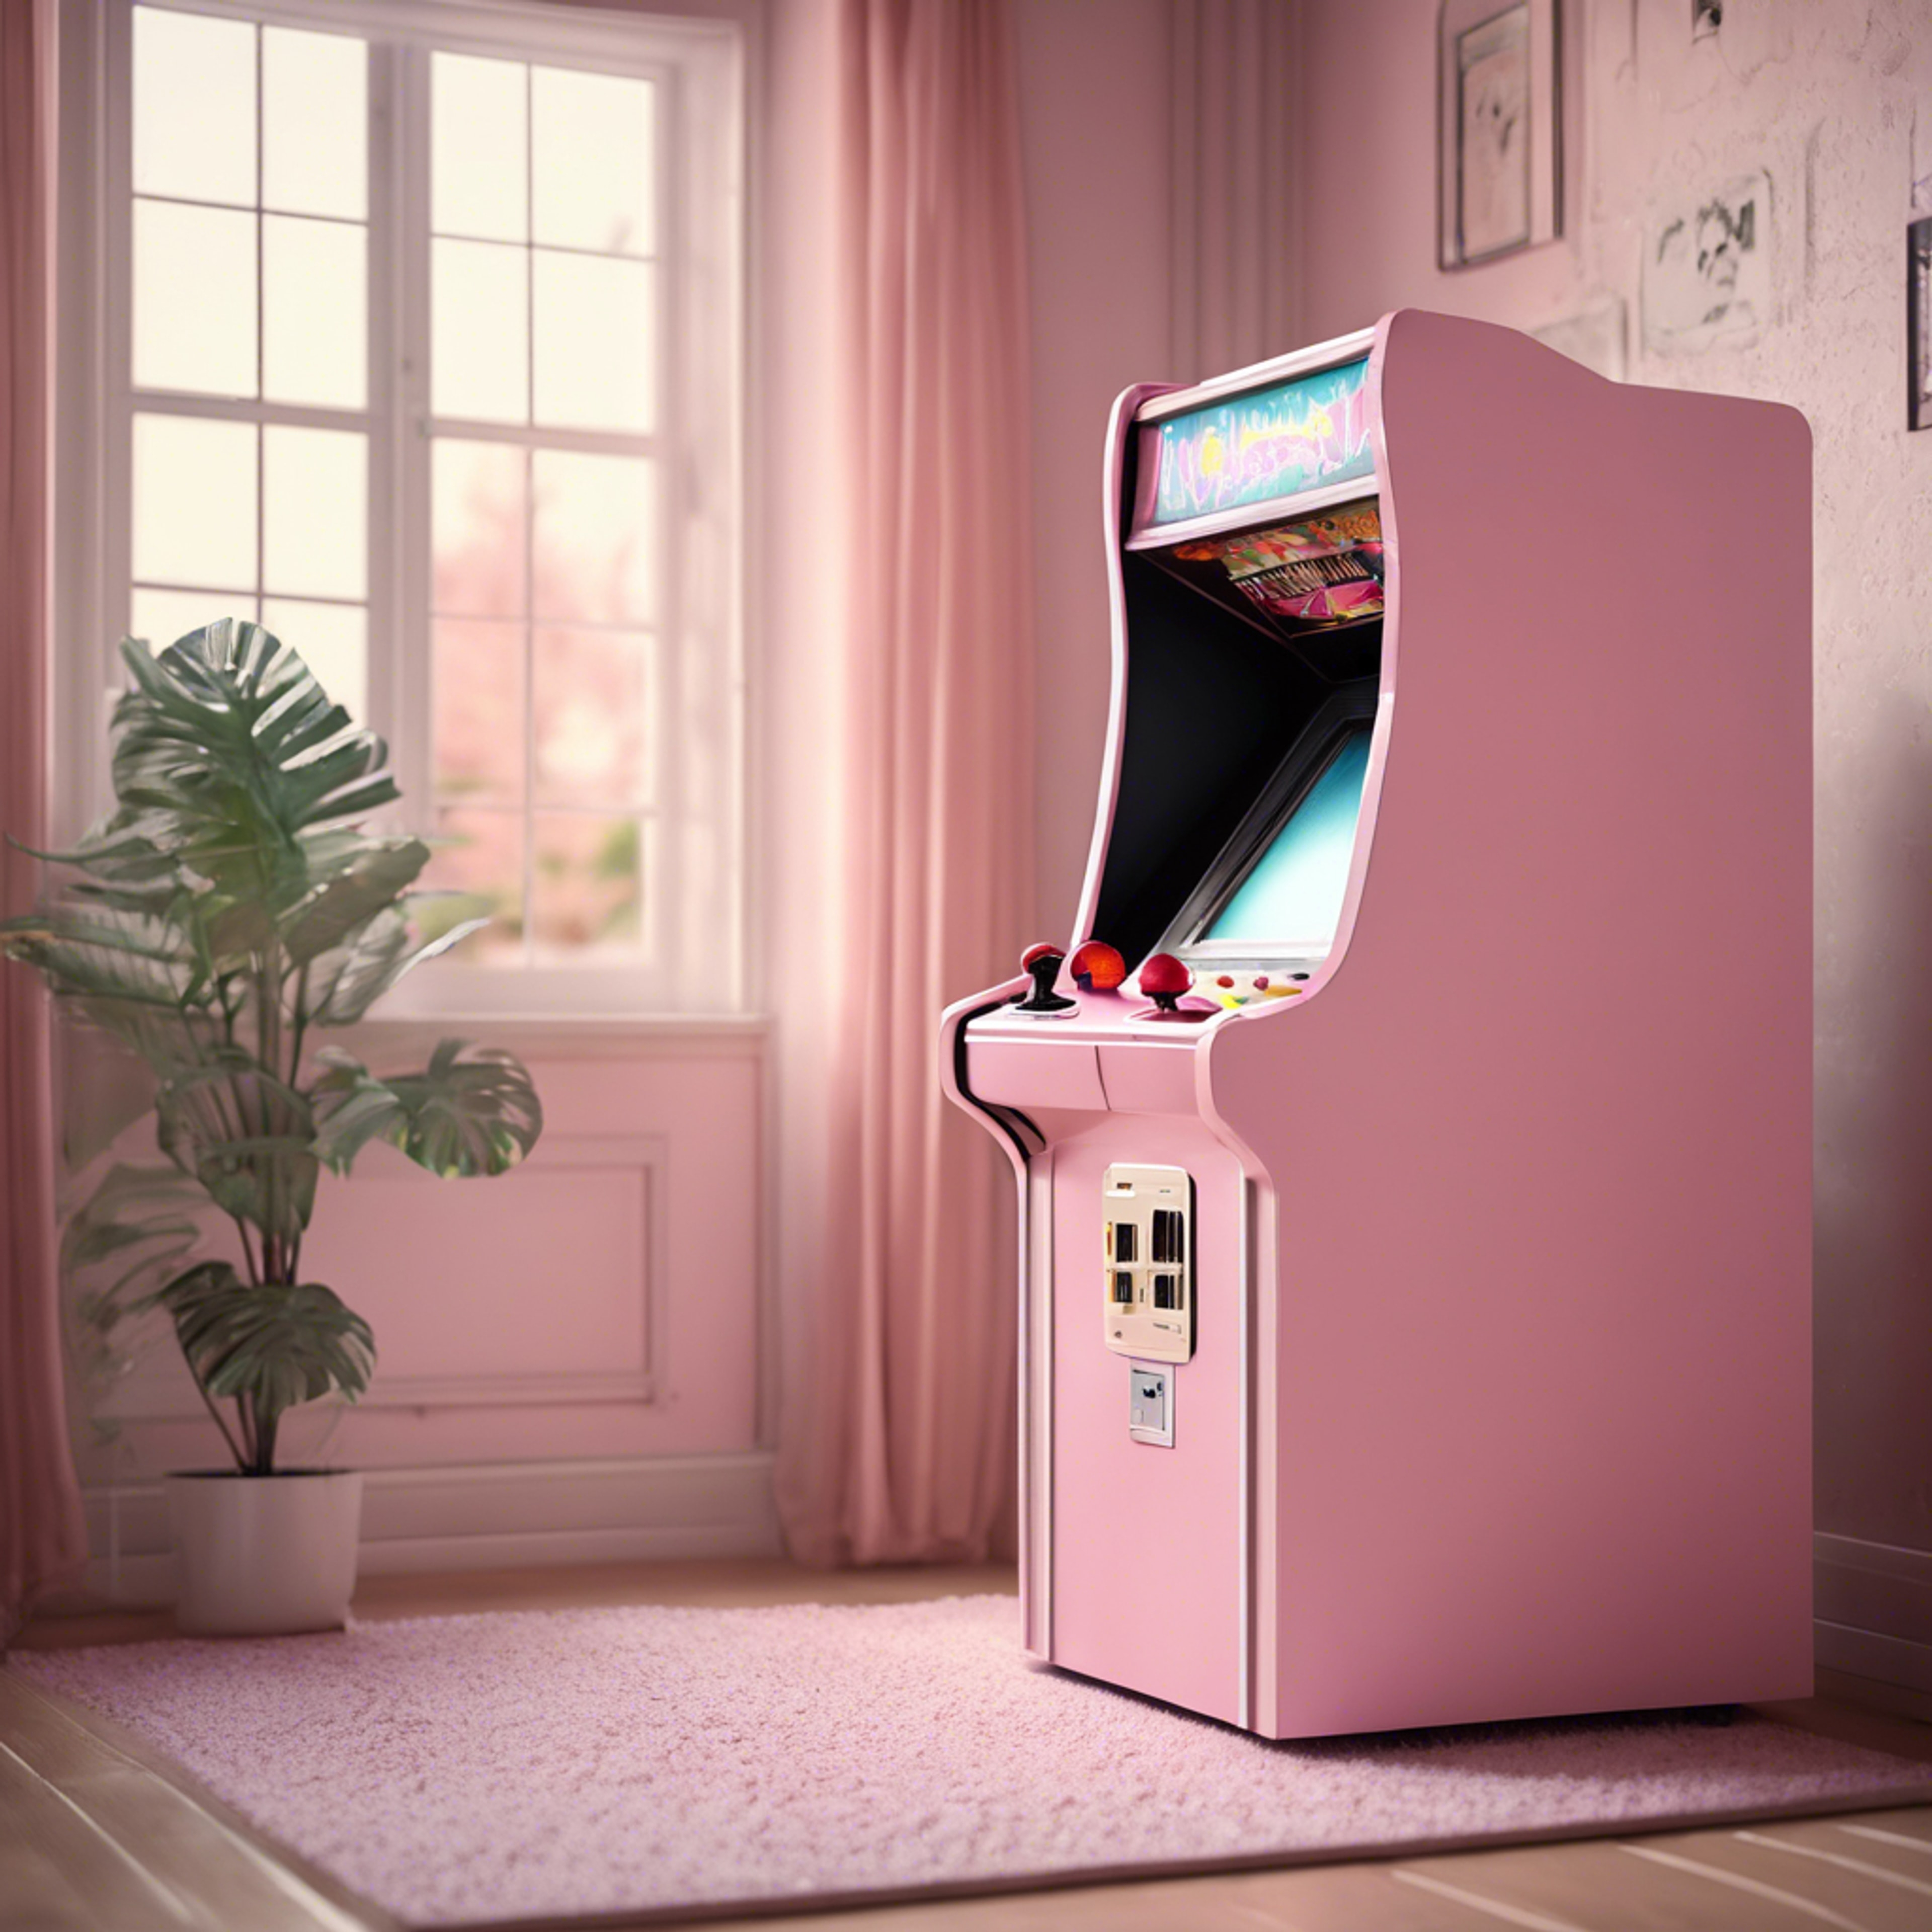 A pastel pink retro arcade machine in a cute, feminine room during sunrise. 墙纸[d6fdc55d66e84aad939c]